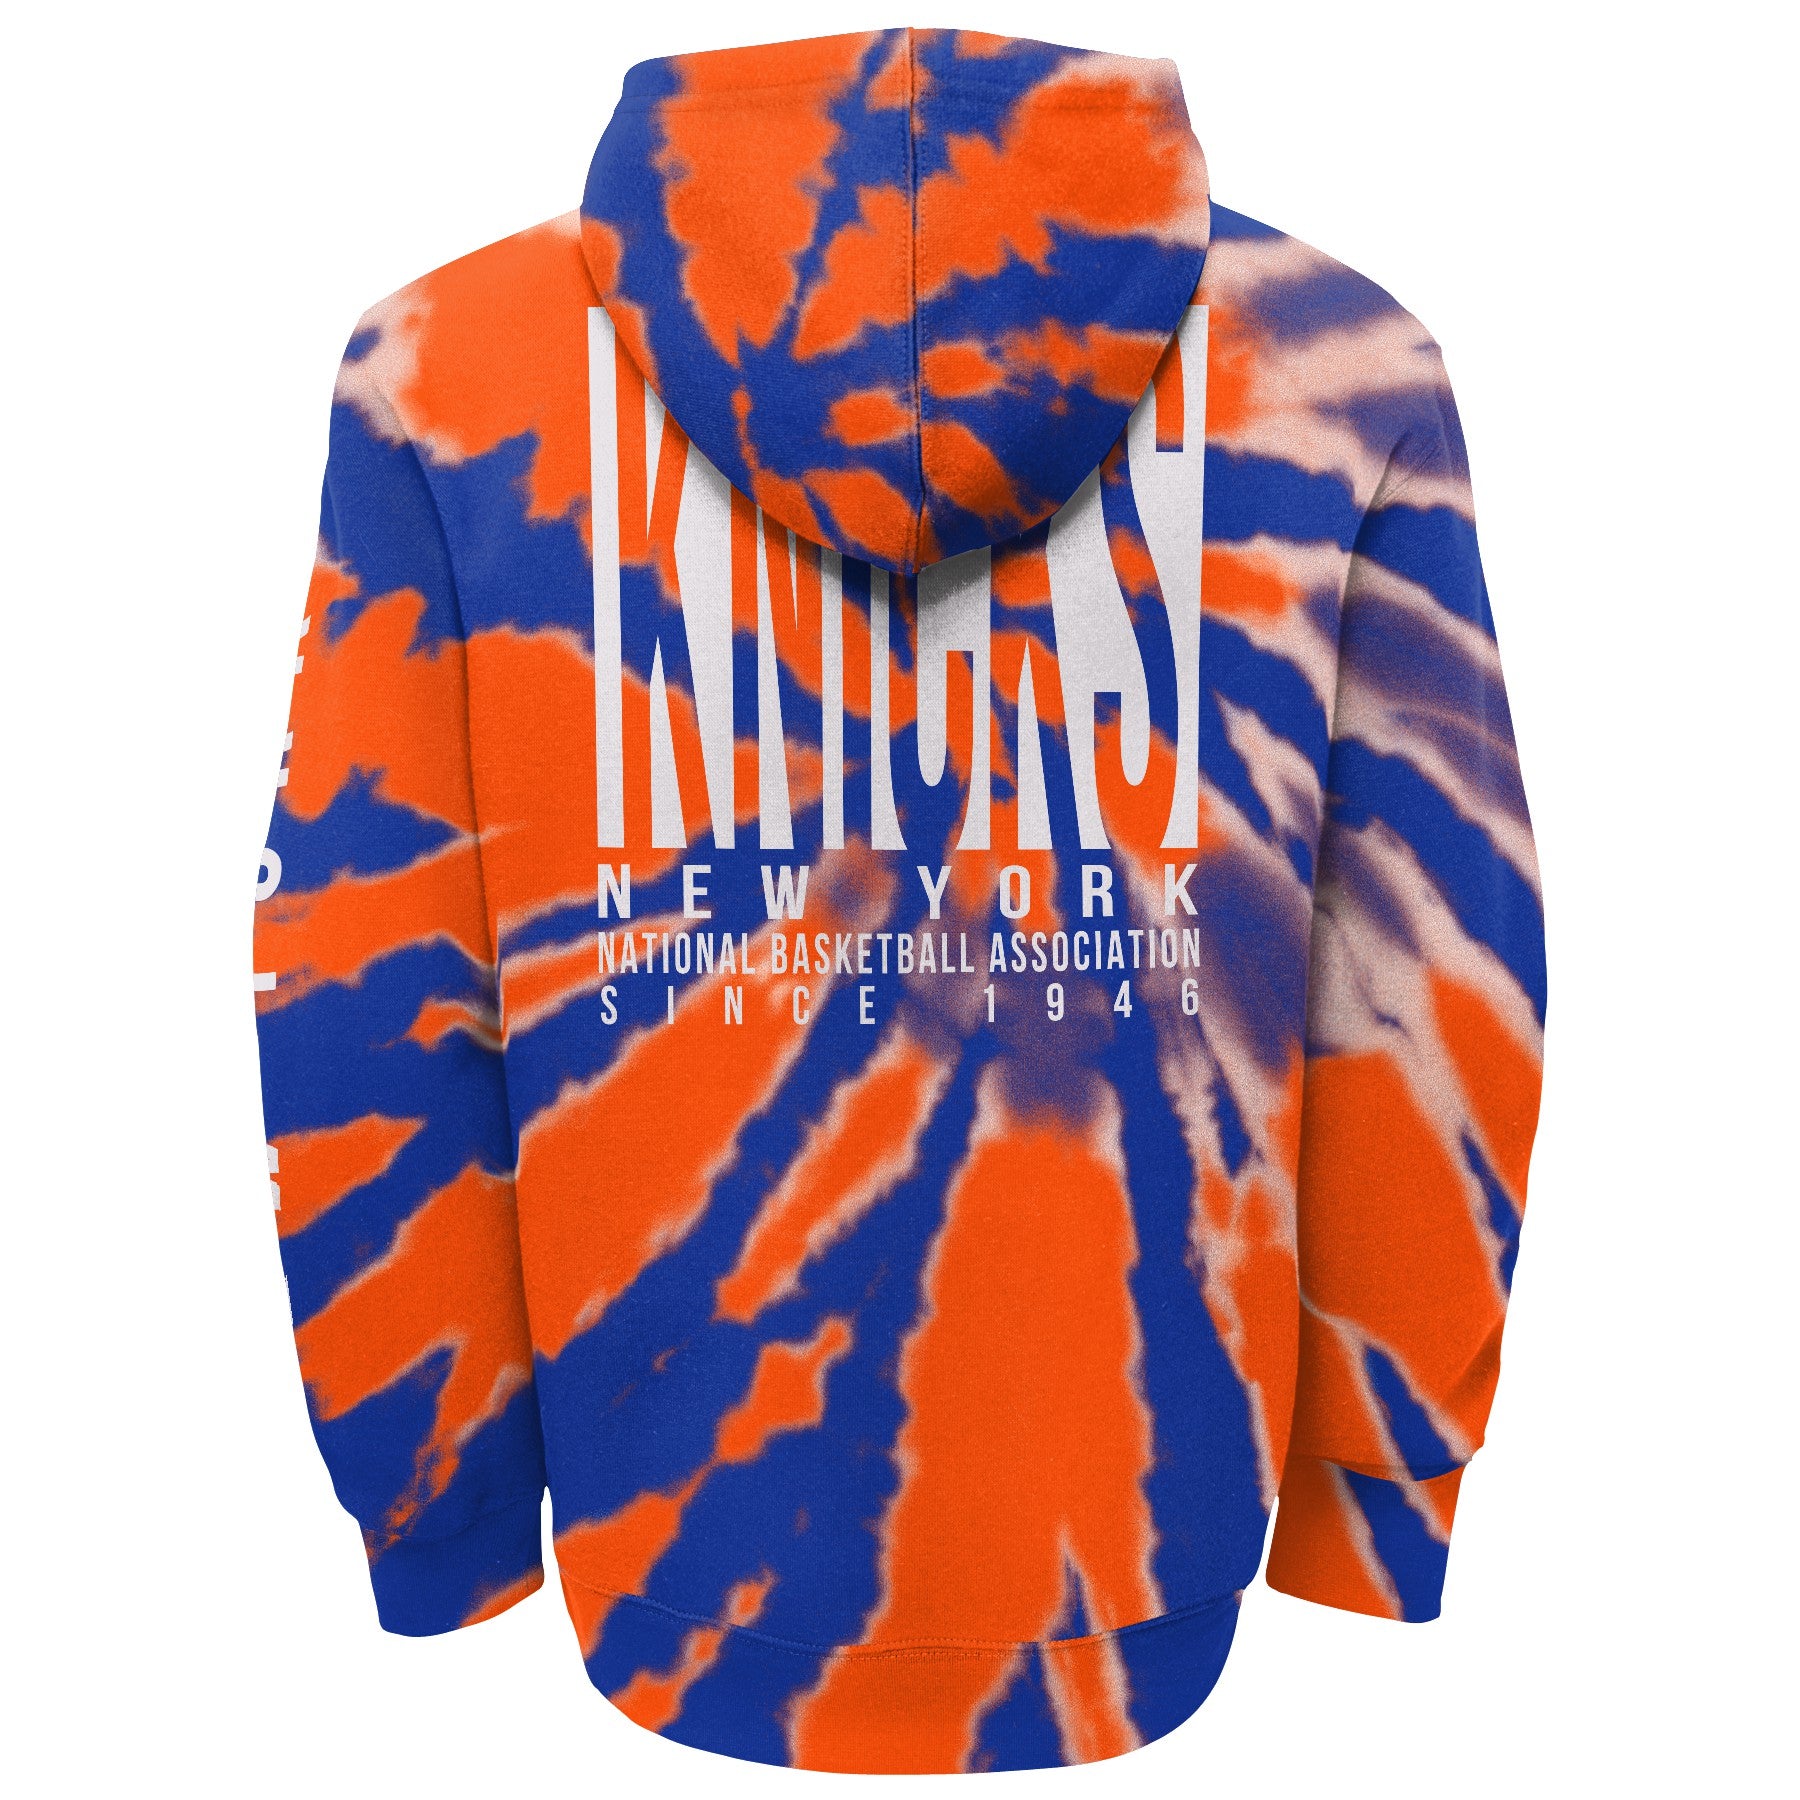 Hybrid New York Knicks Orange Tie Dye in Size XL - $14 - From Mary